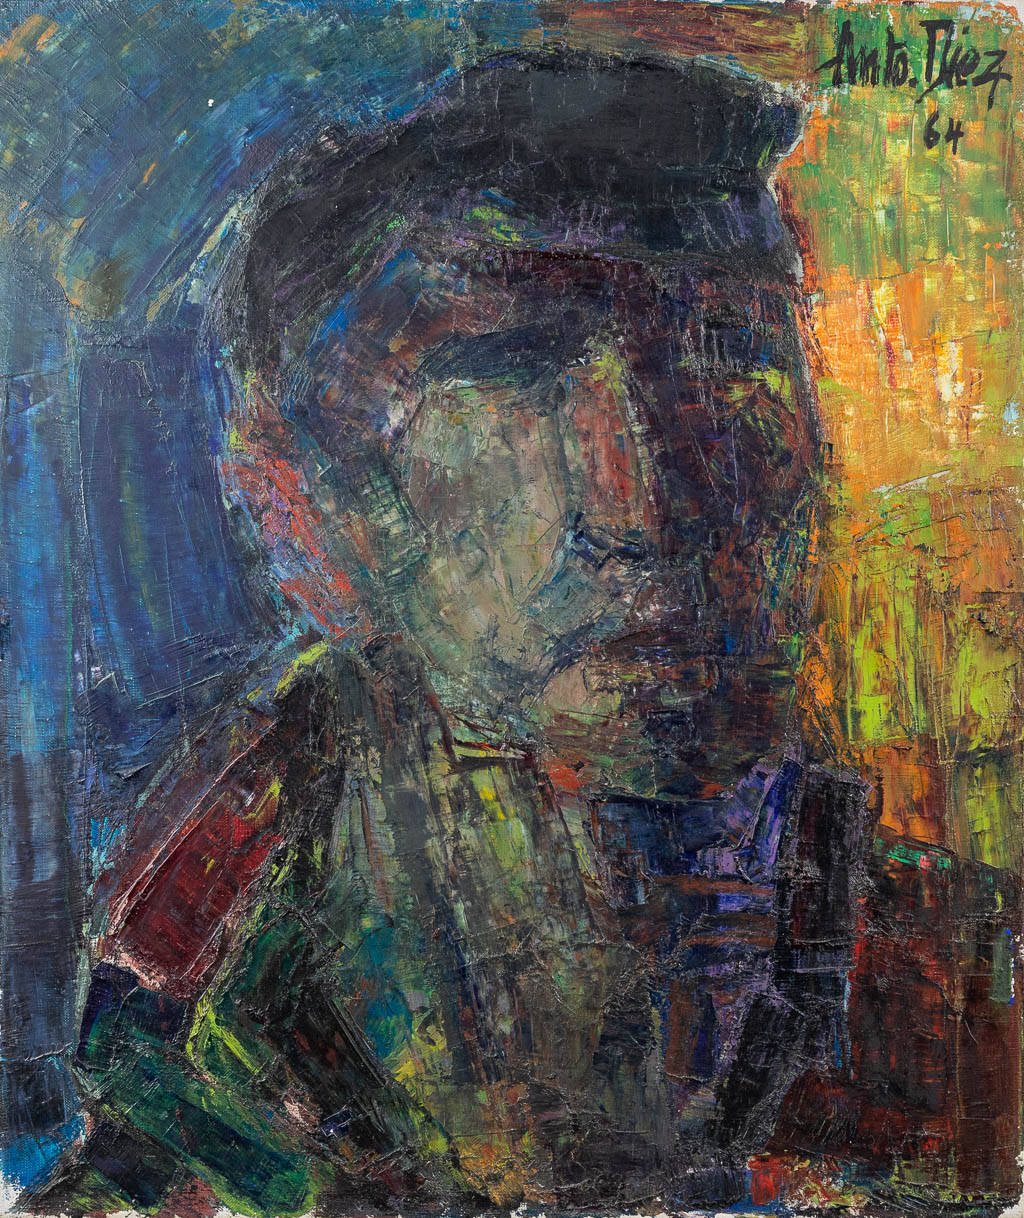 Anto DIEZ (1914-1992) 'Portait of a Miner' oil on canvas. 1964 (W:55 x H:65 cm)